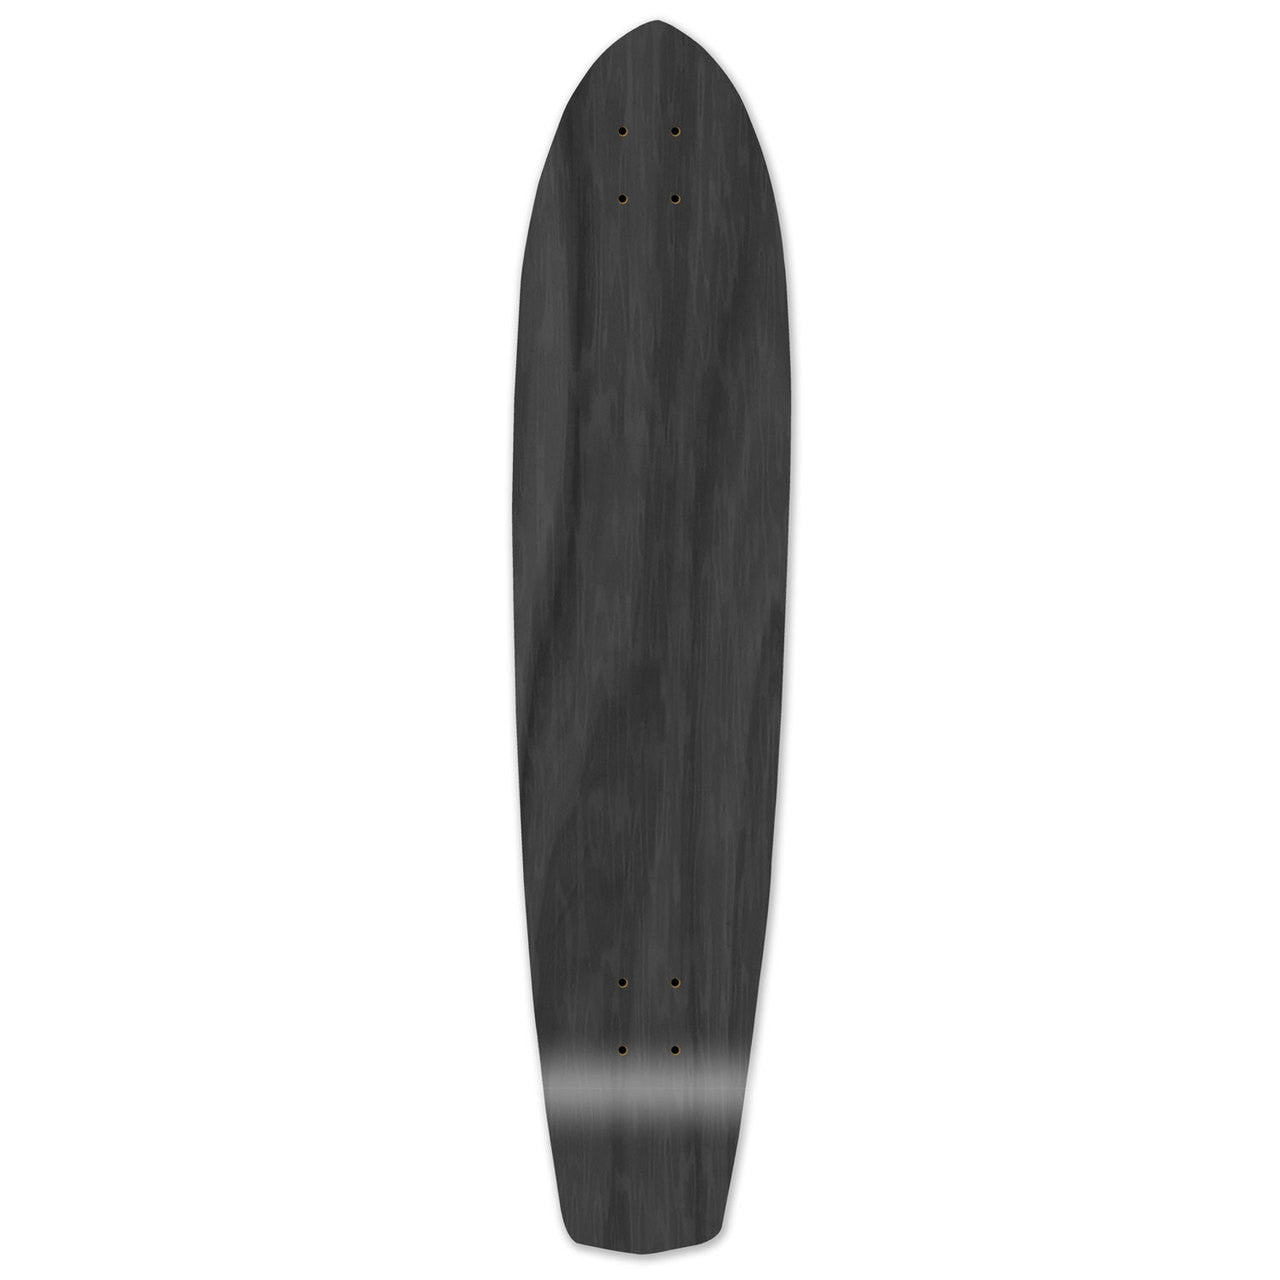 Yocaher Slimkick Longboard Deck - Stained Black